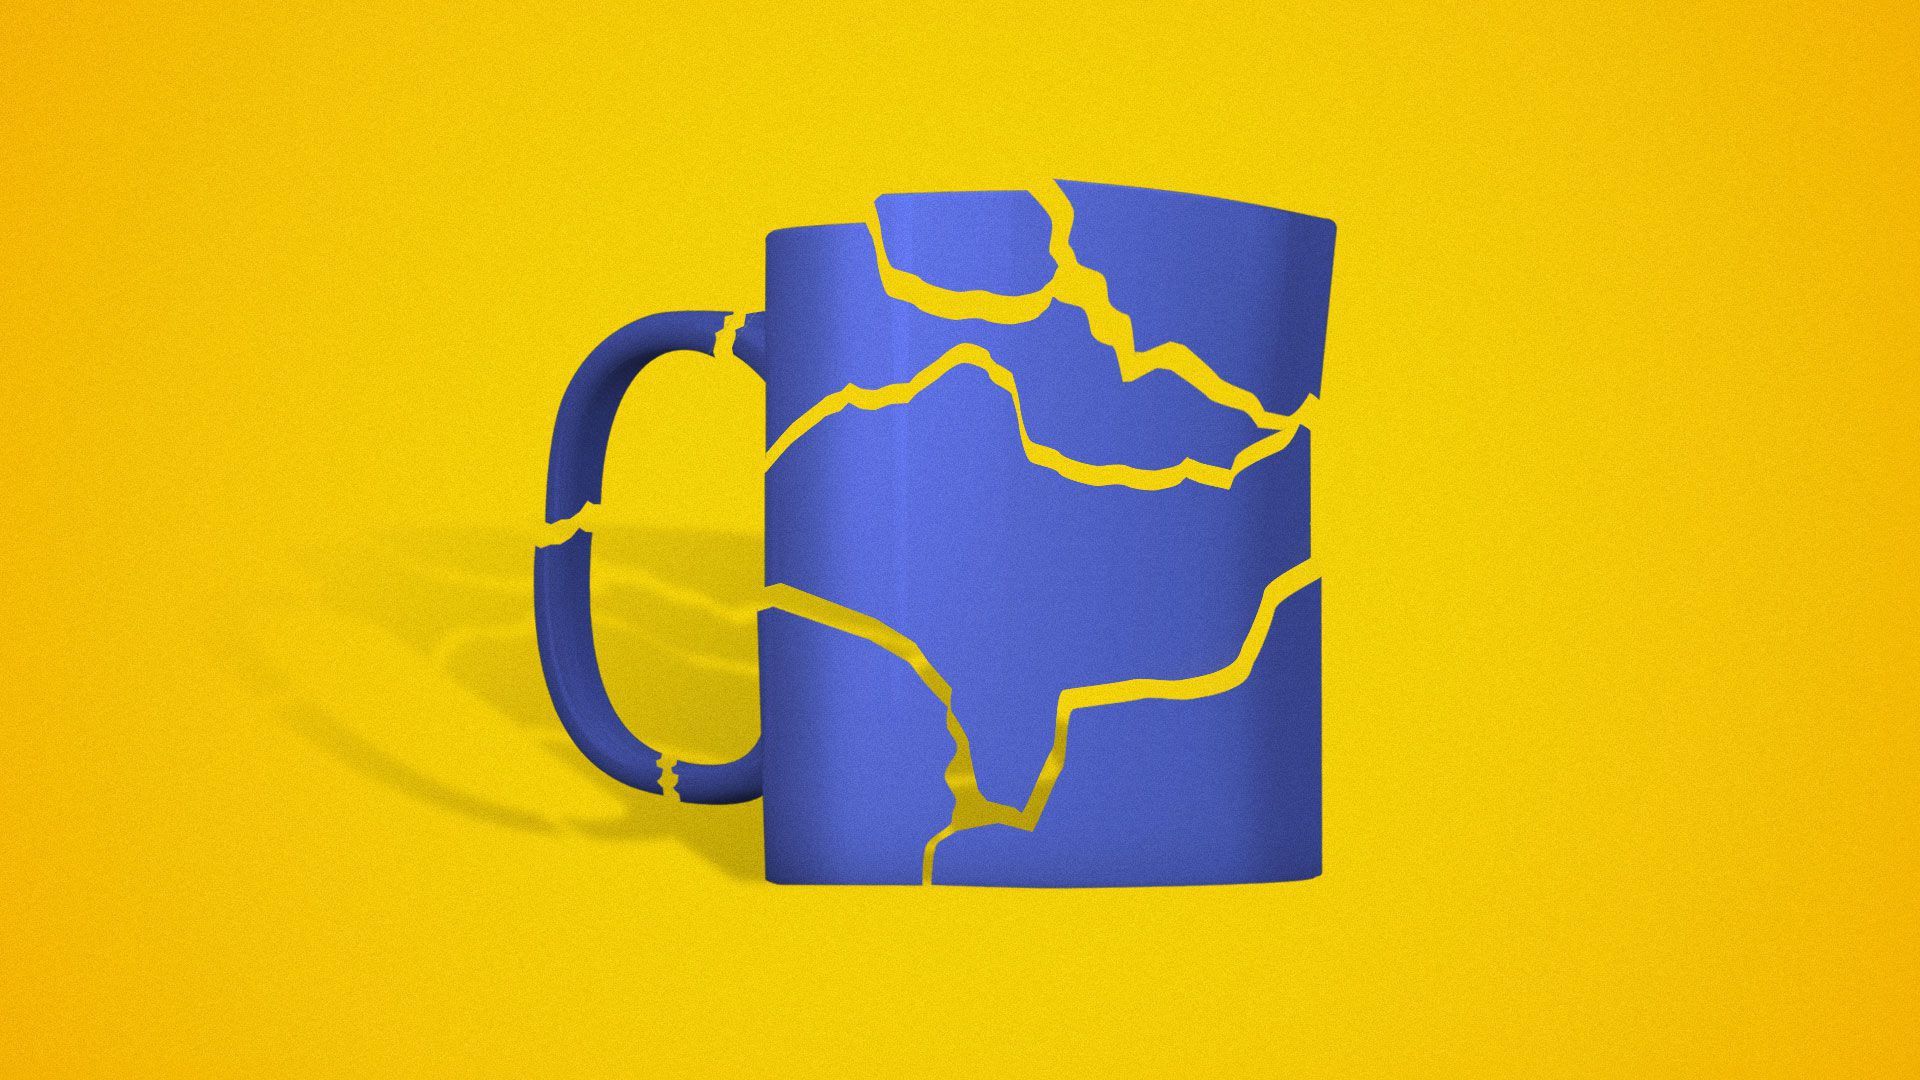 An illustration of a broken coffee mug